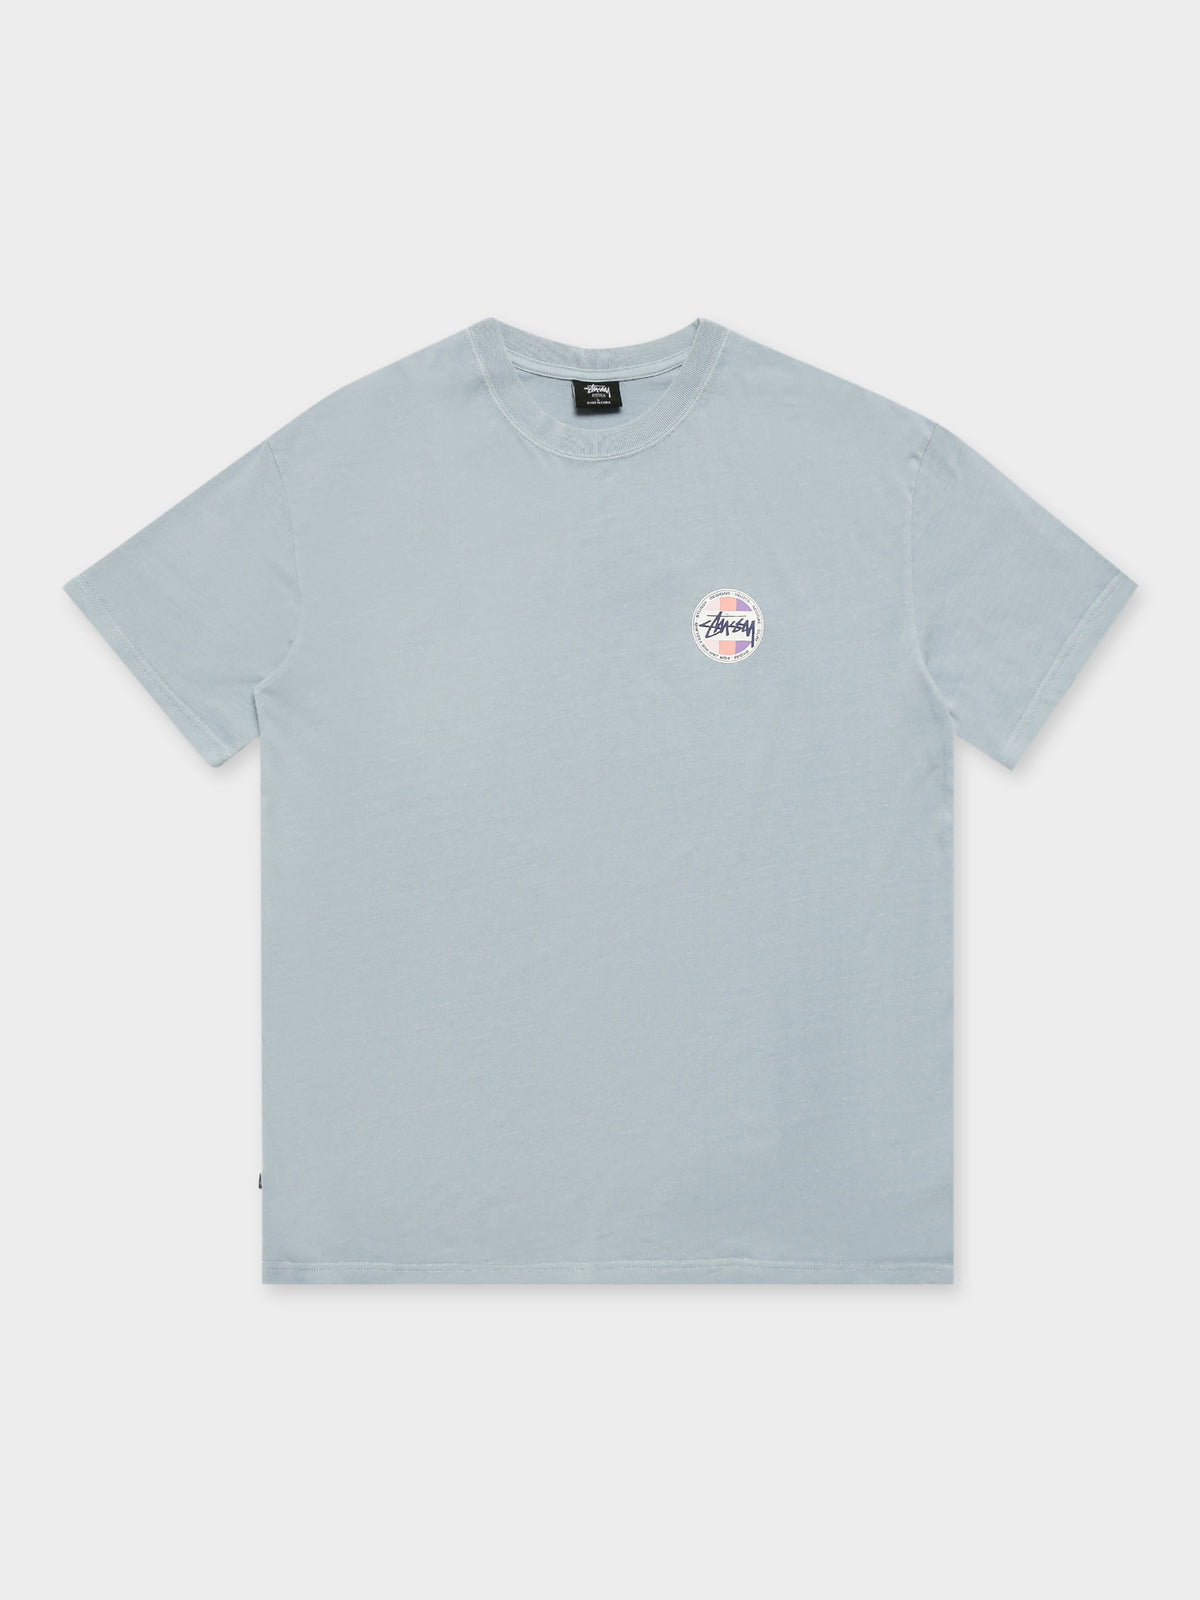 Stock Dot T-Shirt in Pigment Powder Blue